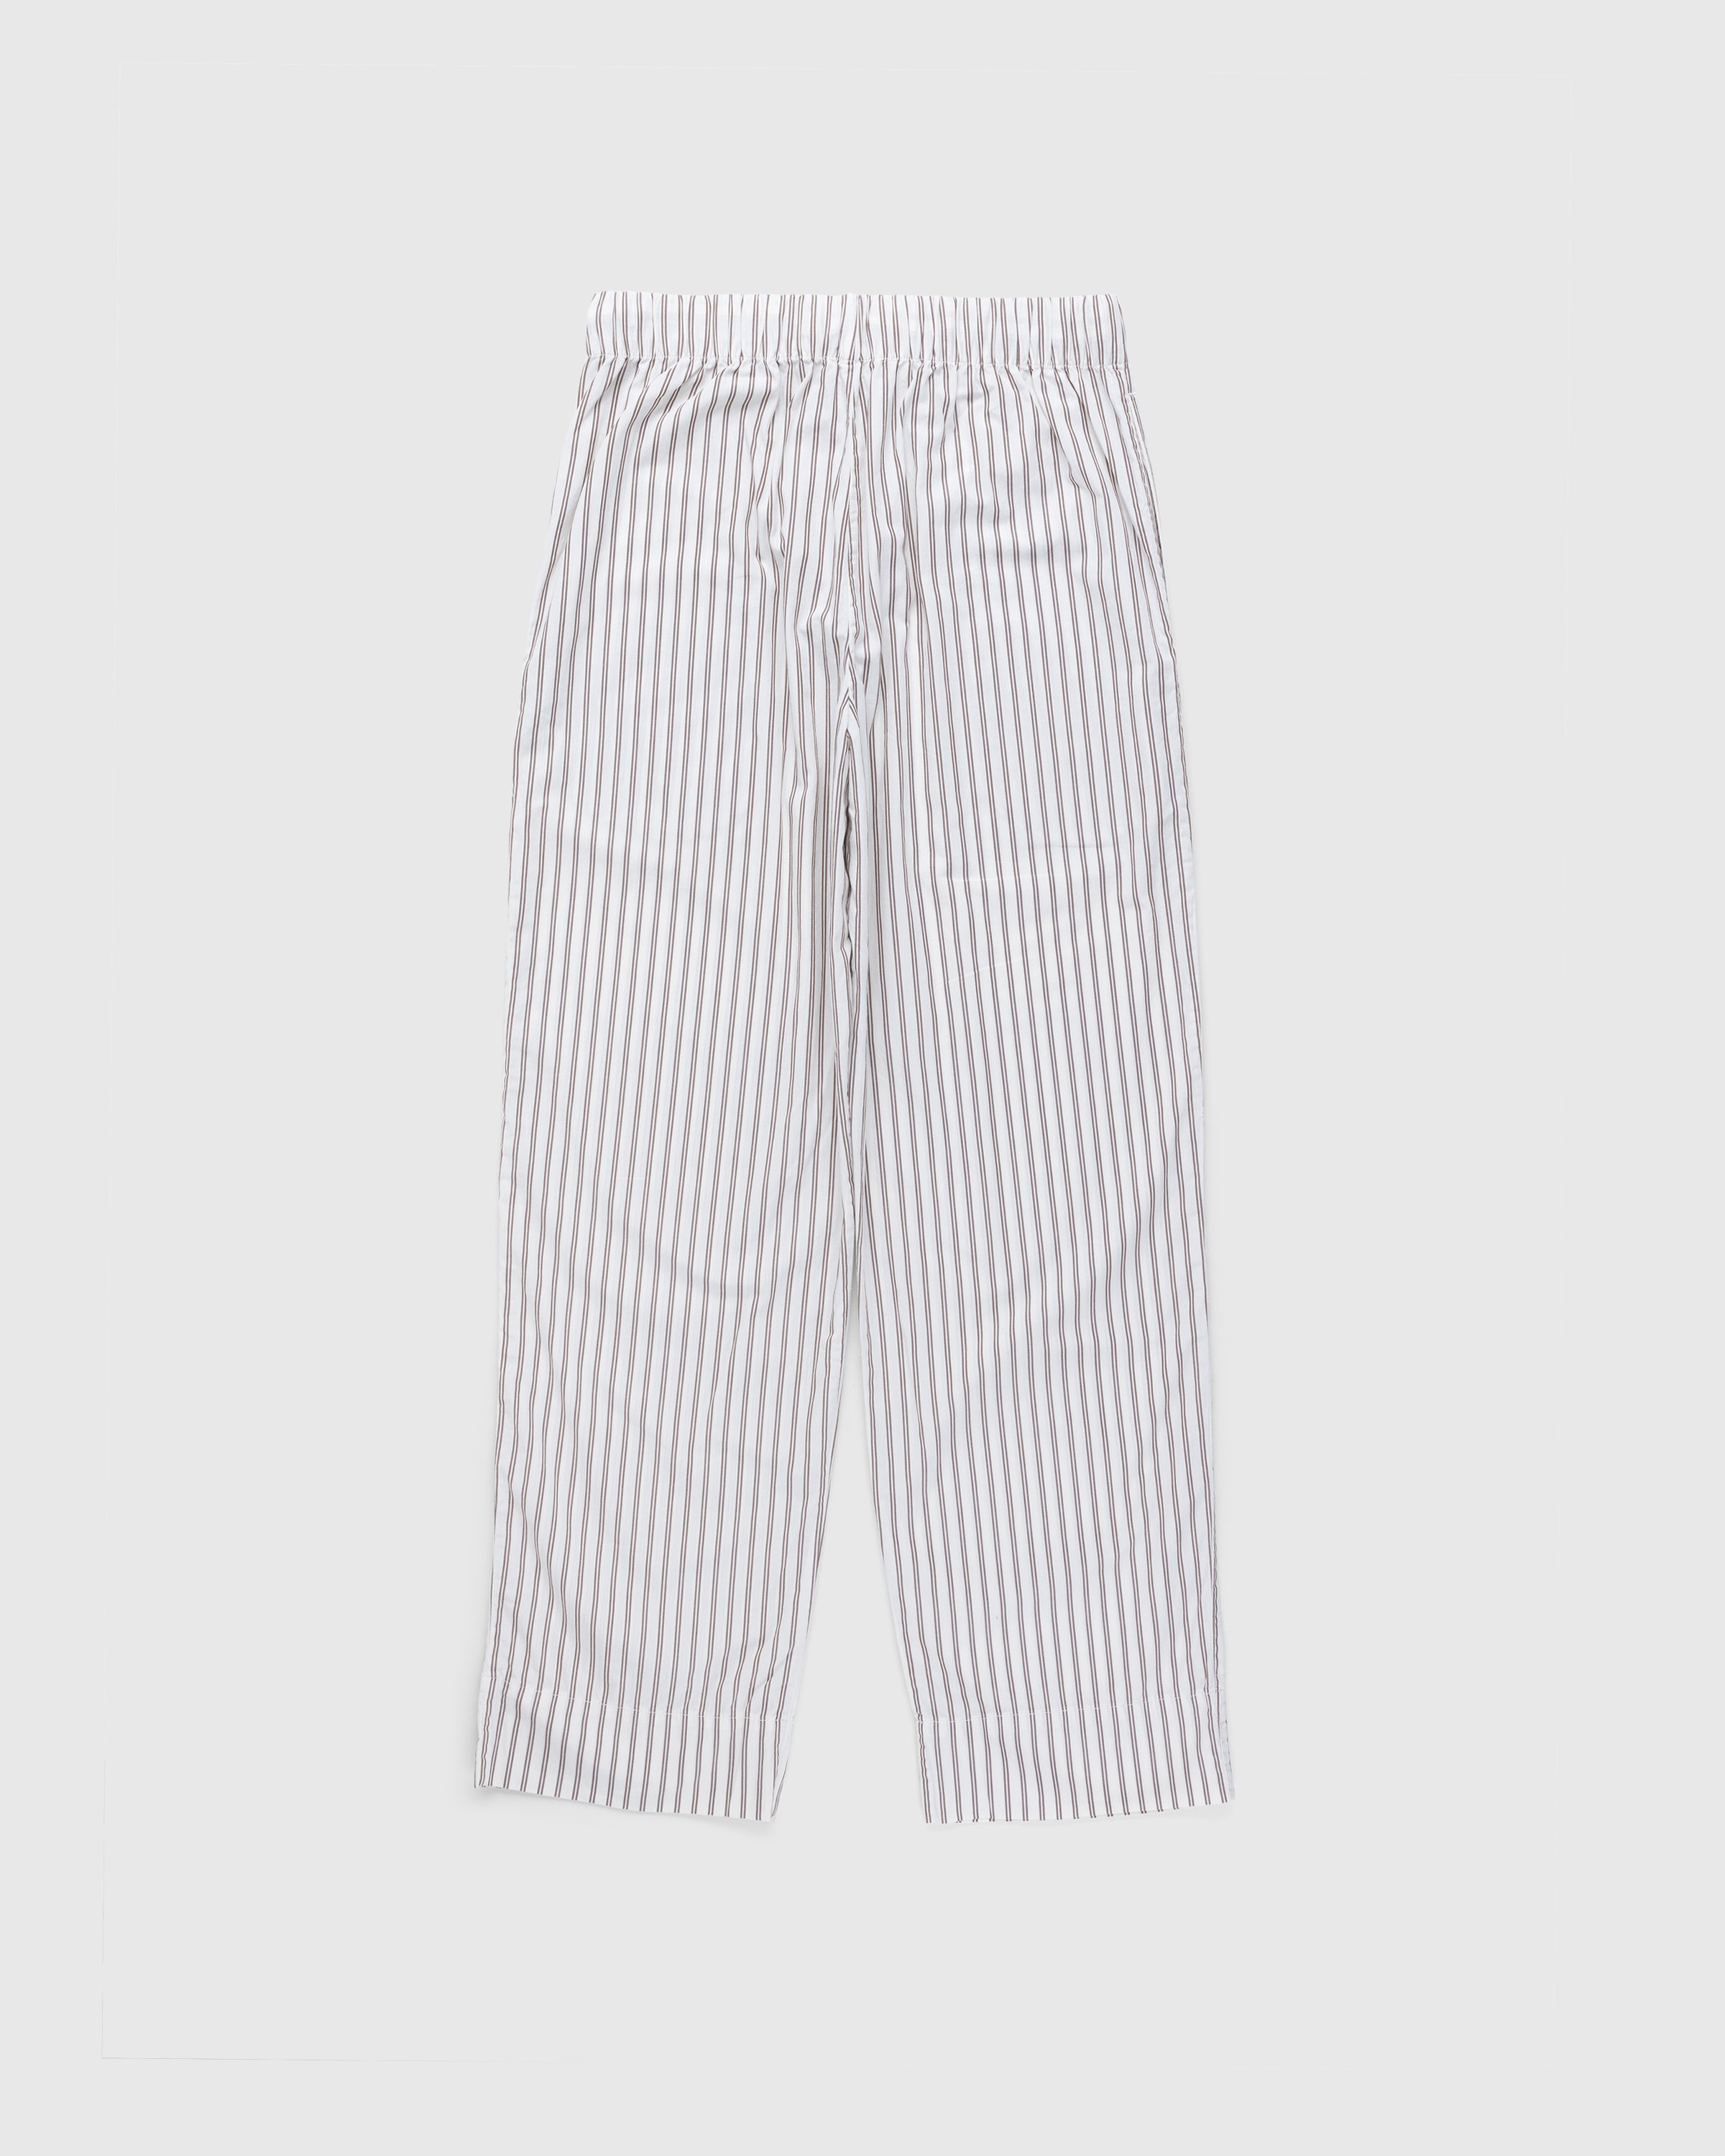 Tekla - Cotton Poplin Pyjamas Pants Hopper Stripes - Clothing - Beige - Image 2